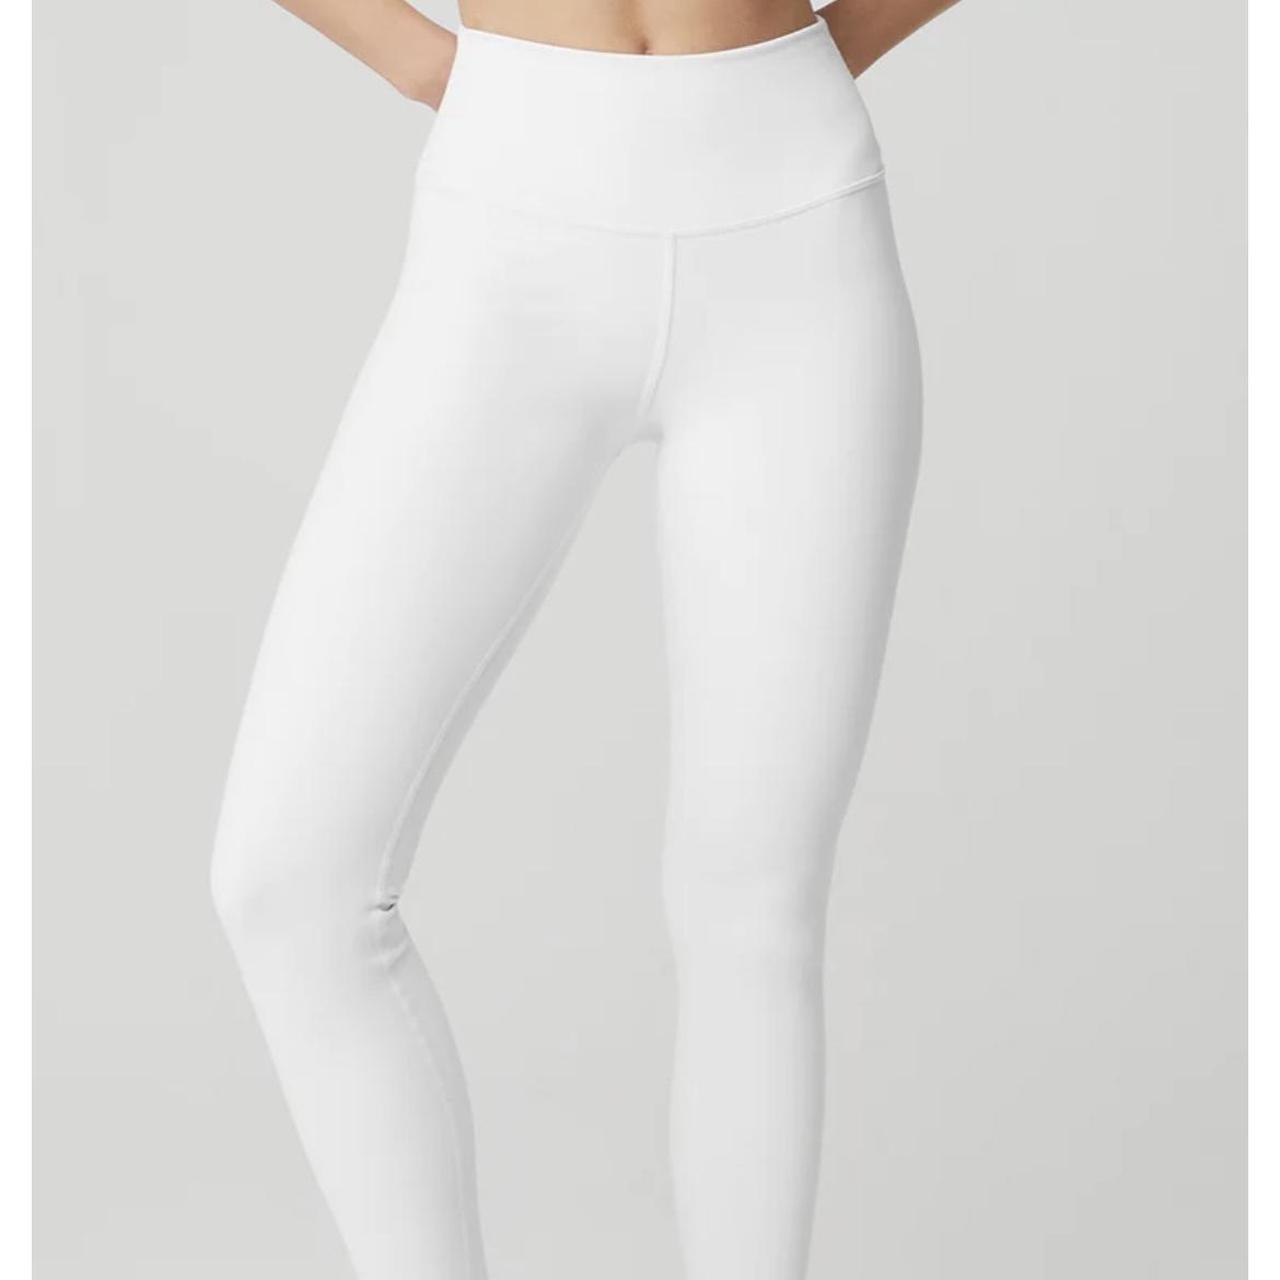 white legging capris size xs - Depop